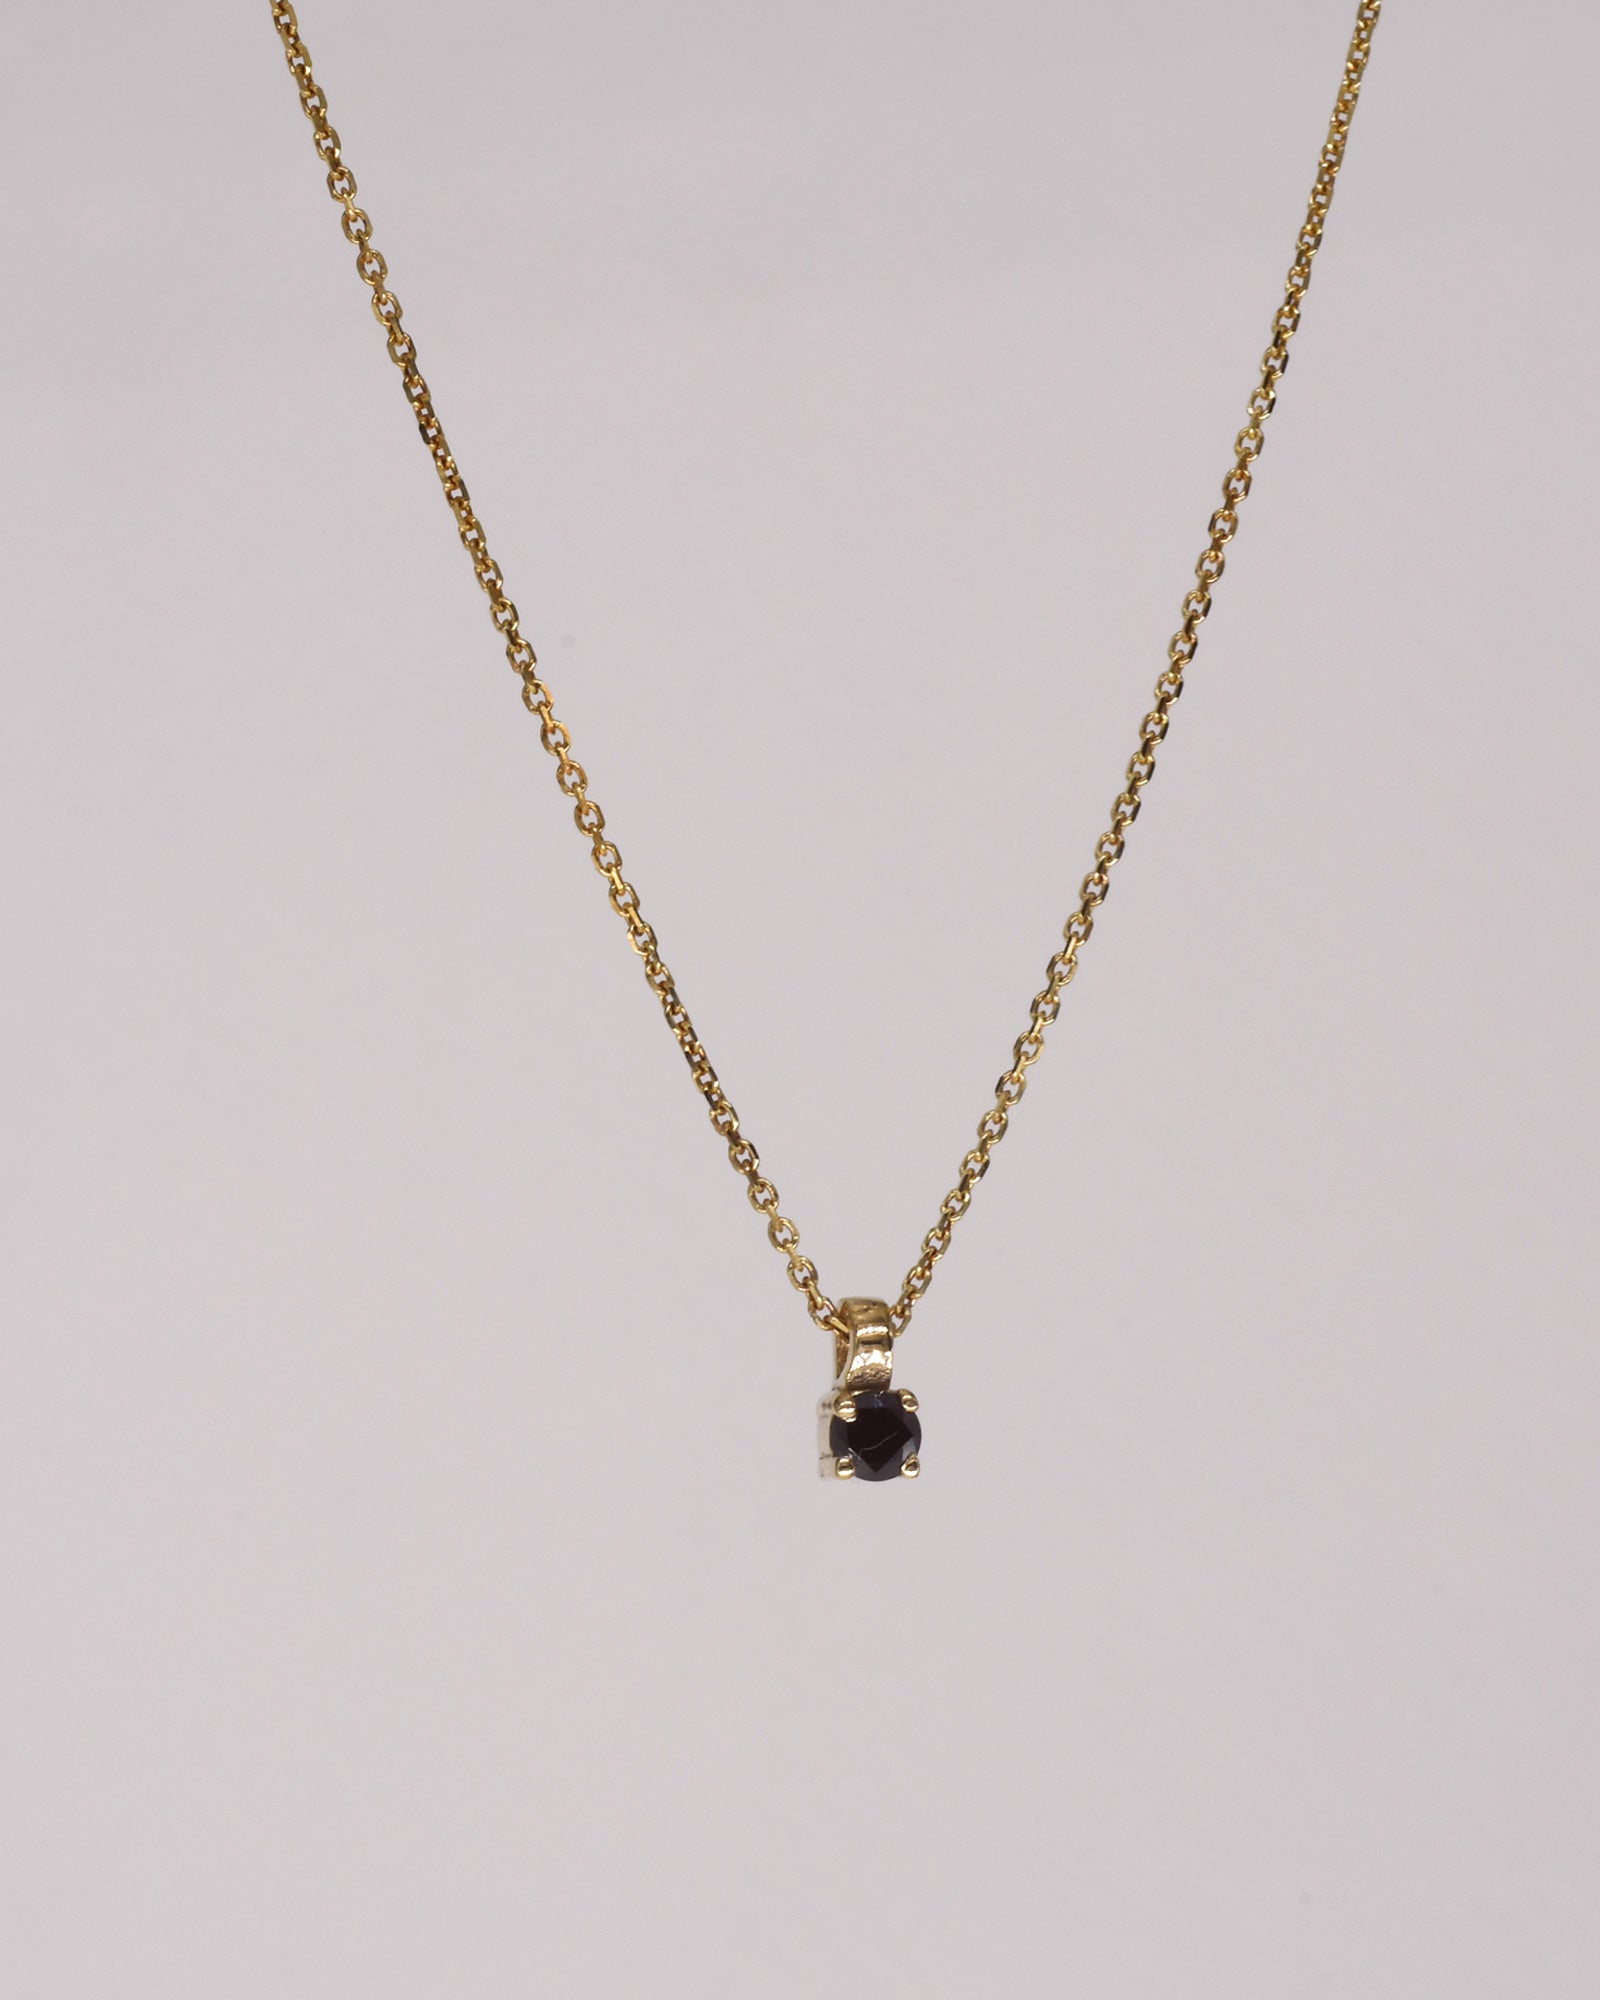 Snow Flake Necklace - Black Diamond